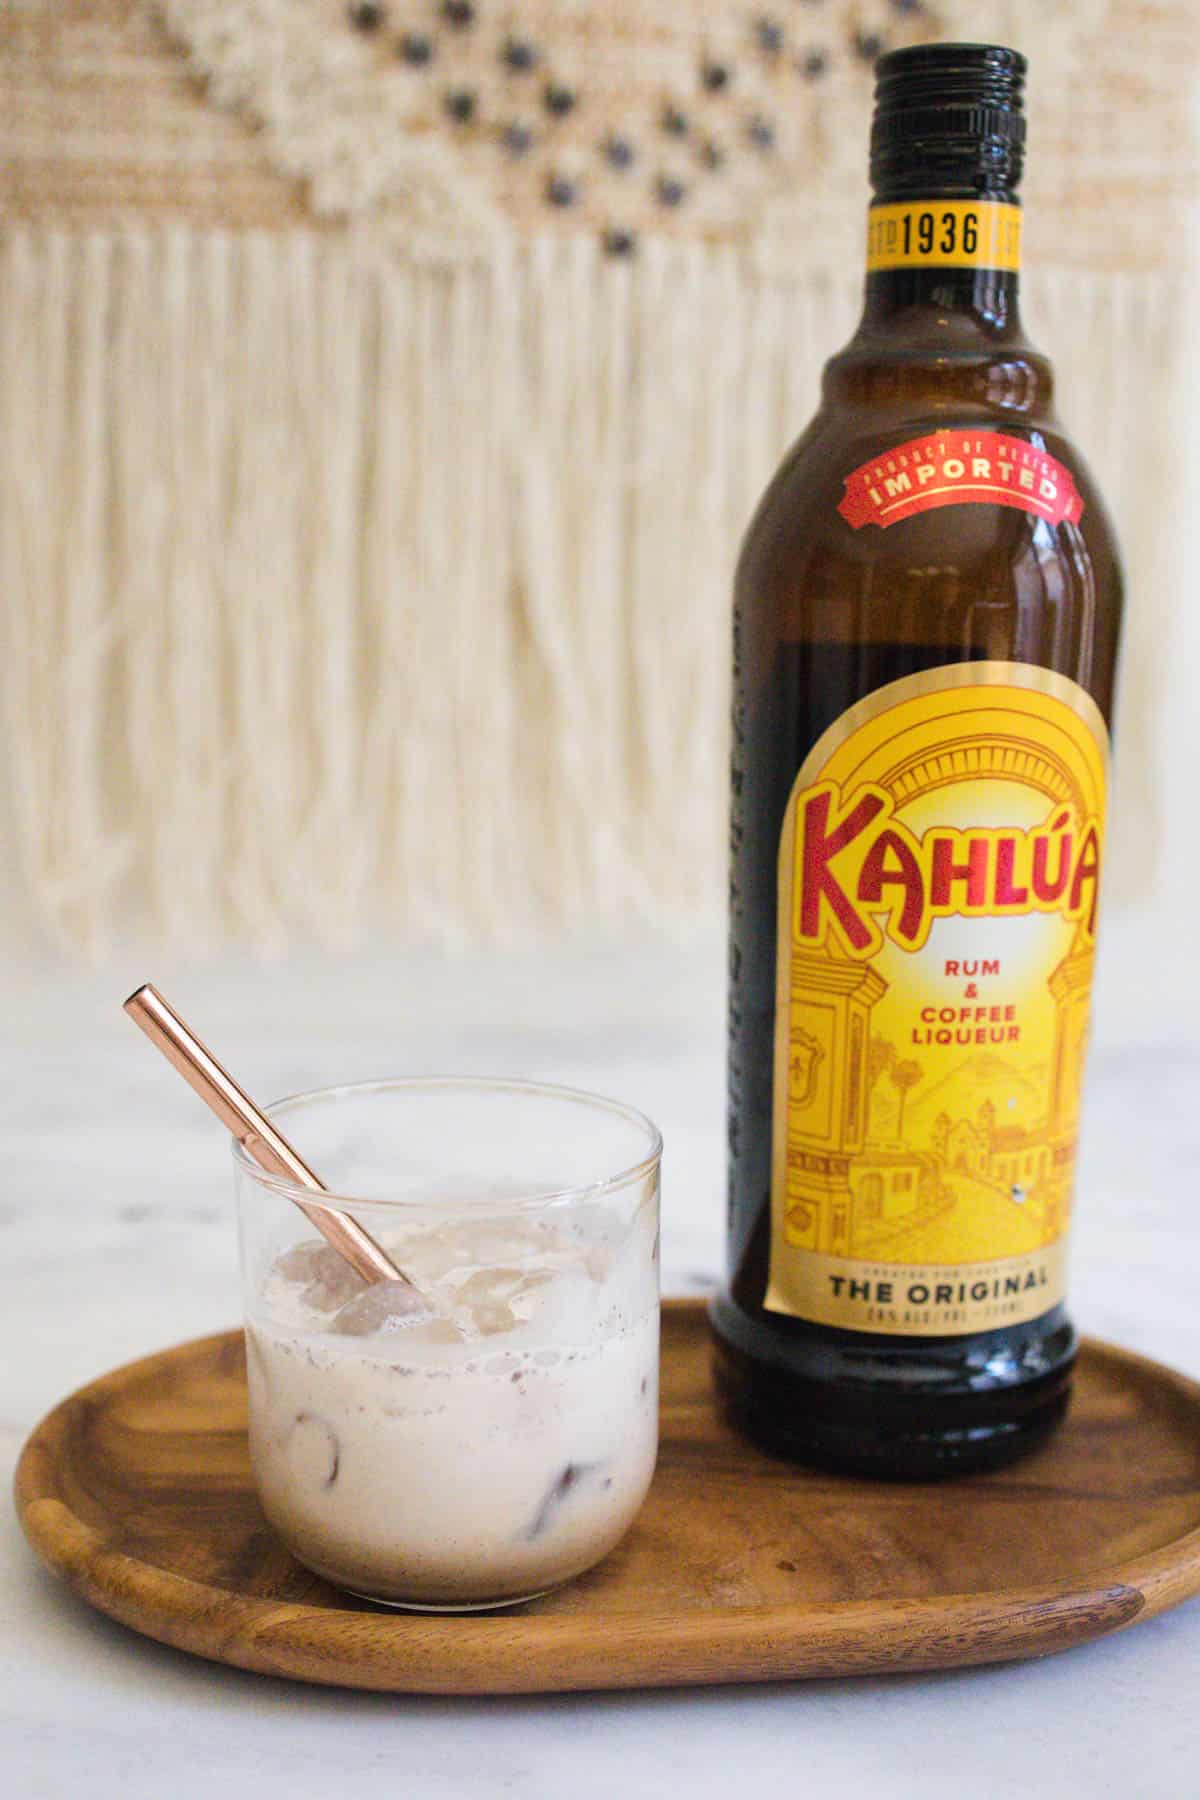 Kahlua and Cream cocktail next to a bottle of Kahlua.